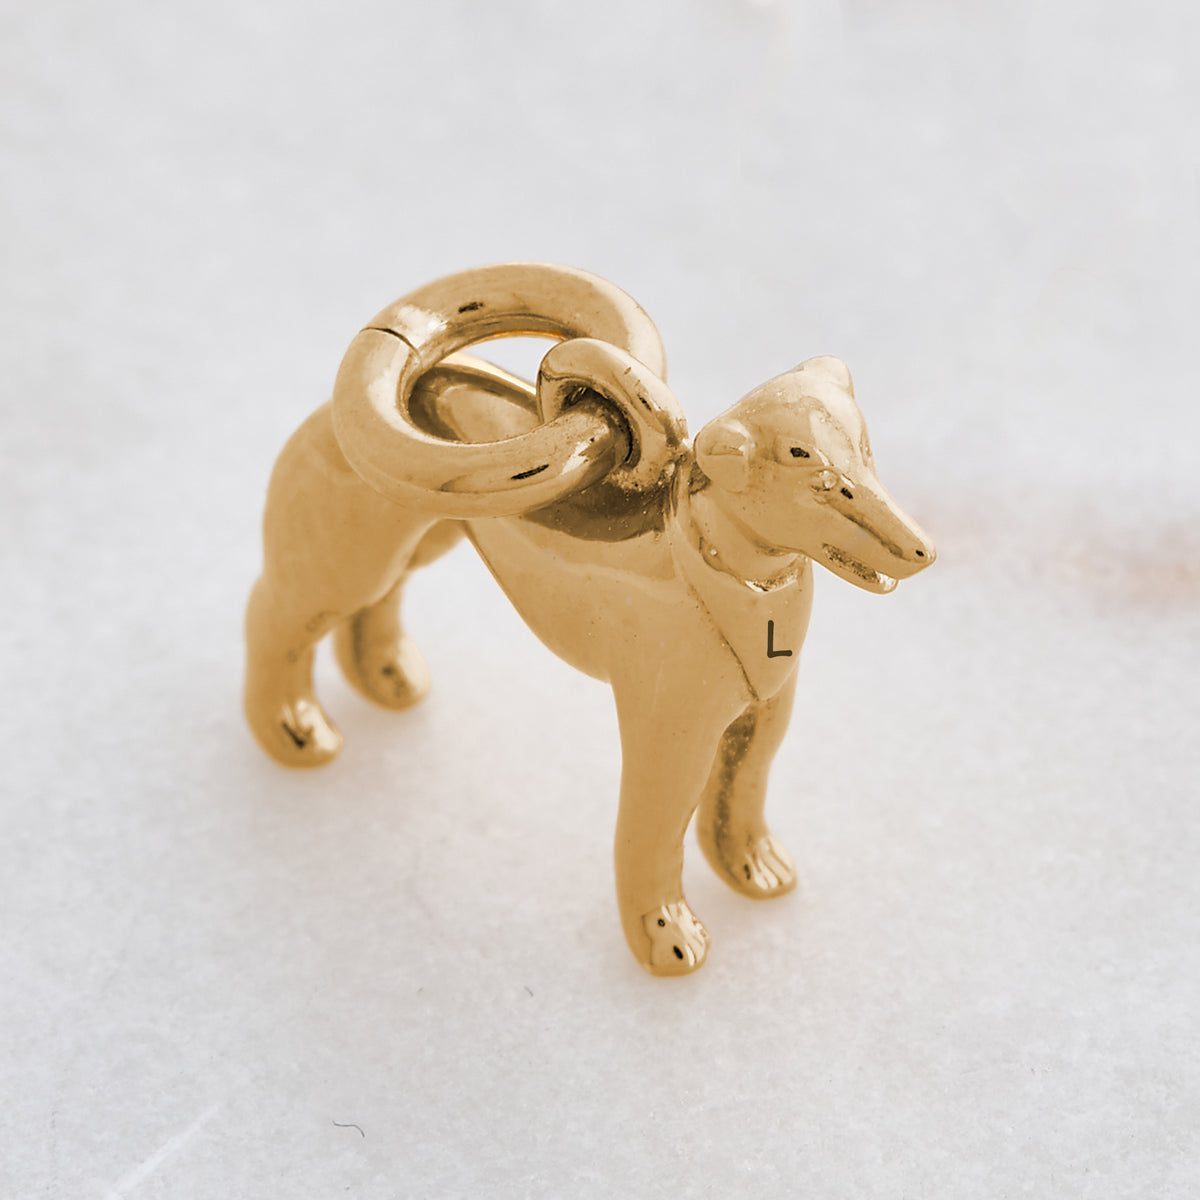 Whippet greyhound solid gold dog bracelet charm or pendant scarlett jewellery